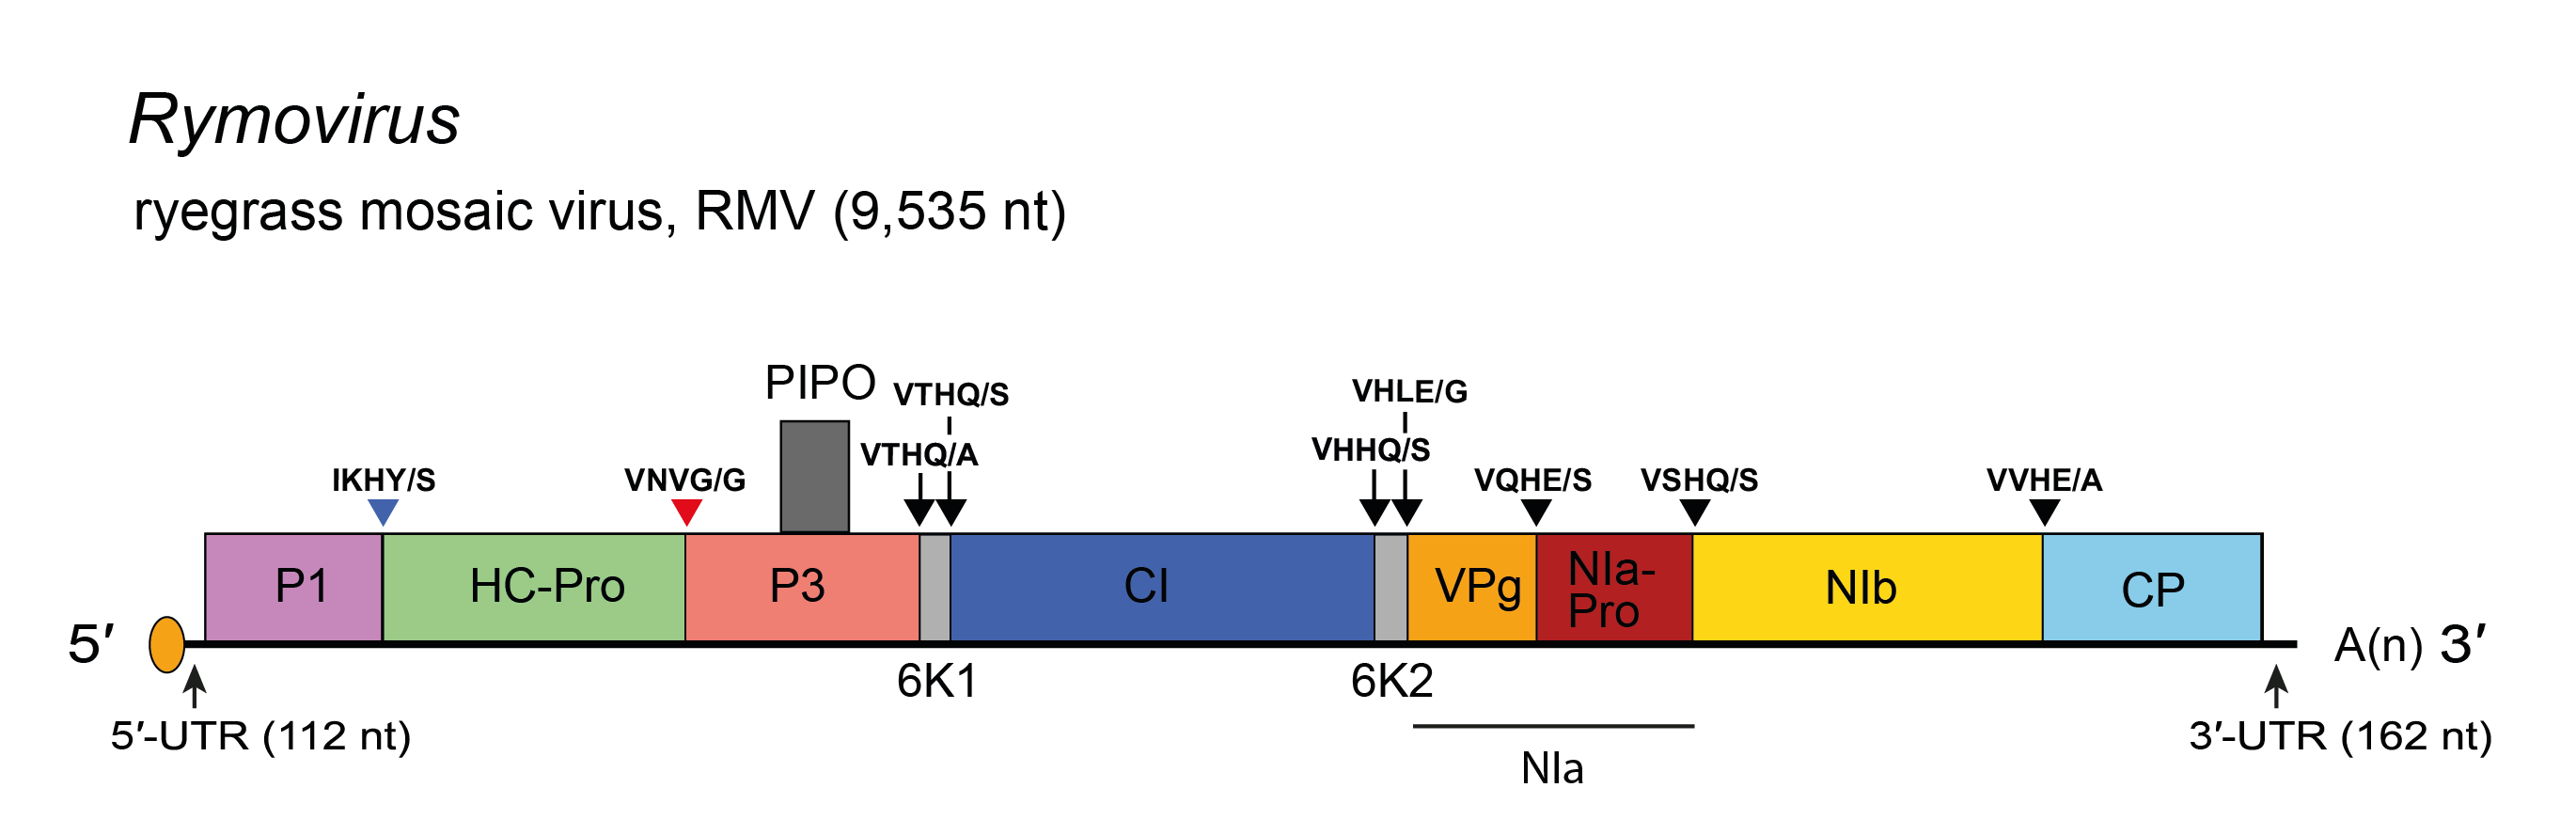 Genome diagram Rymovirus